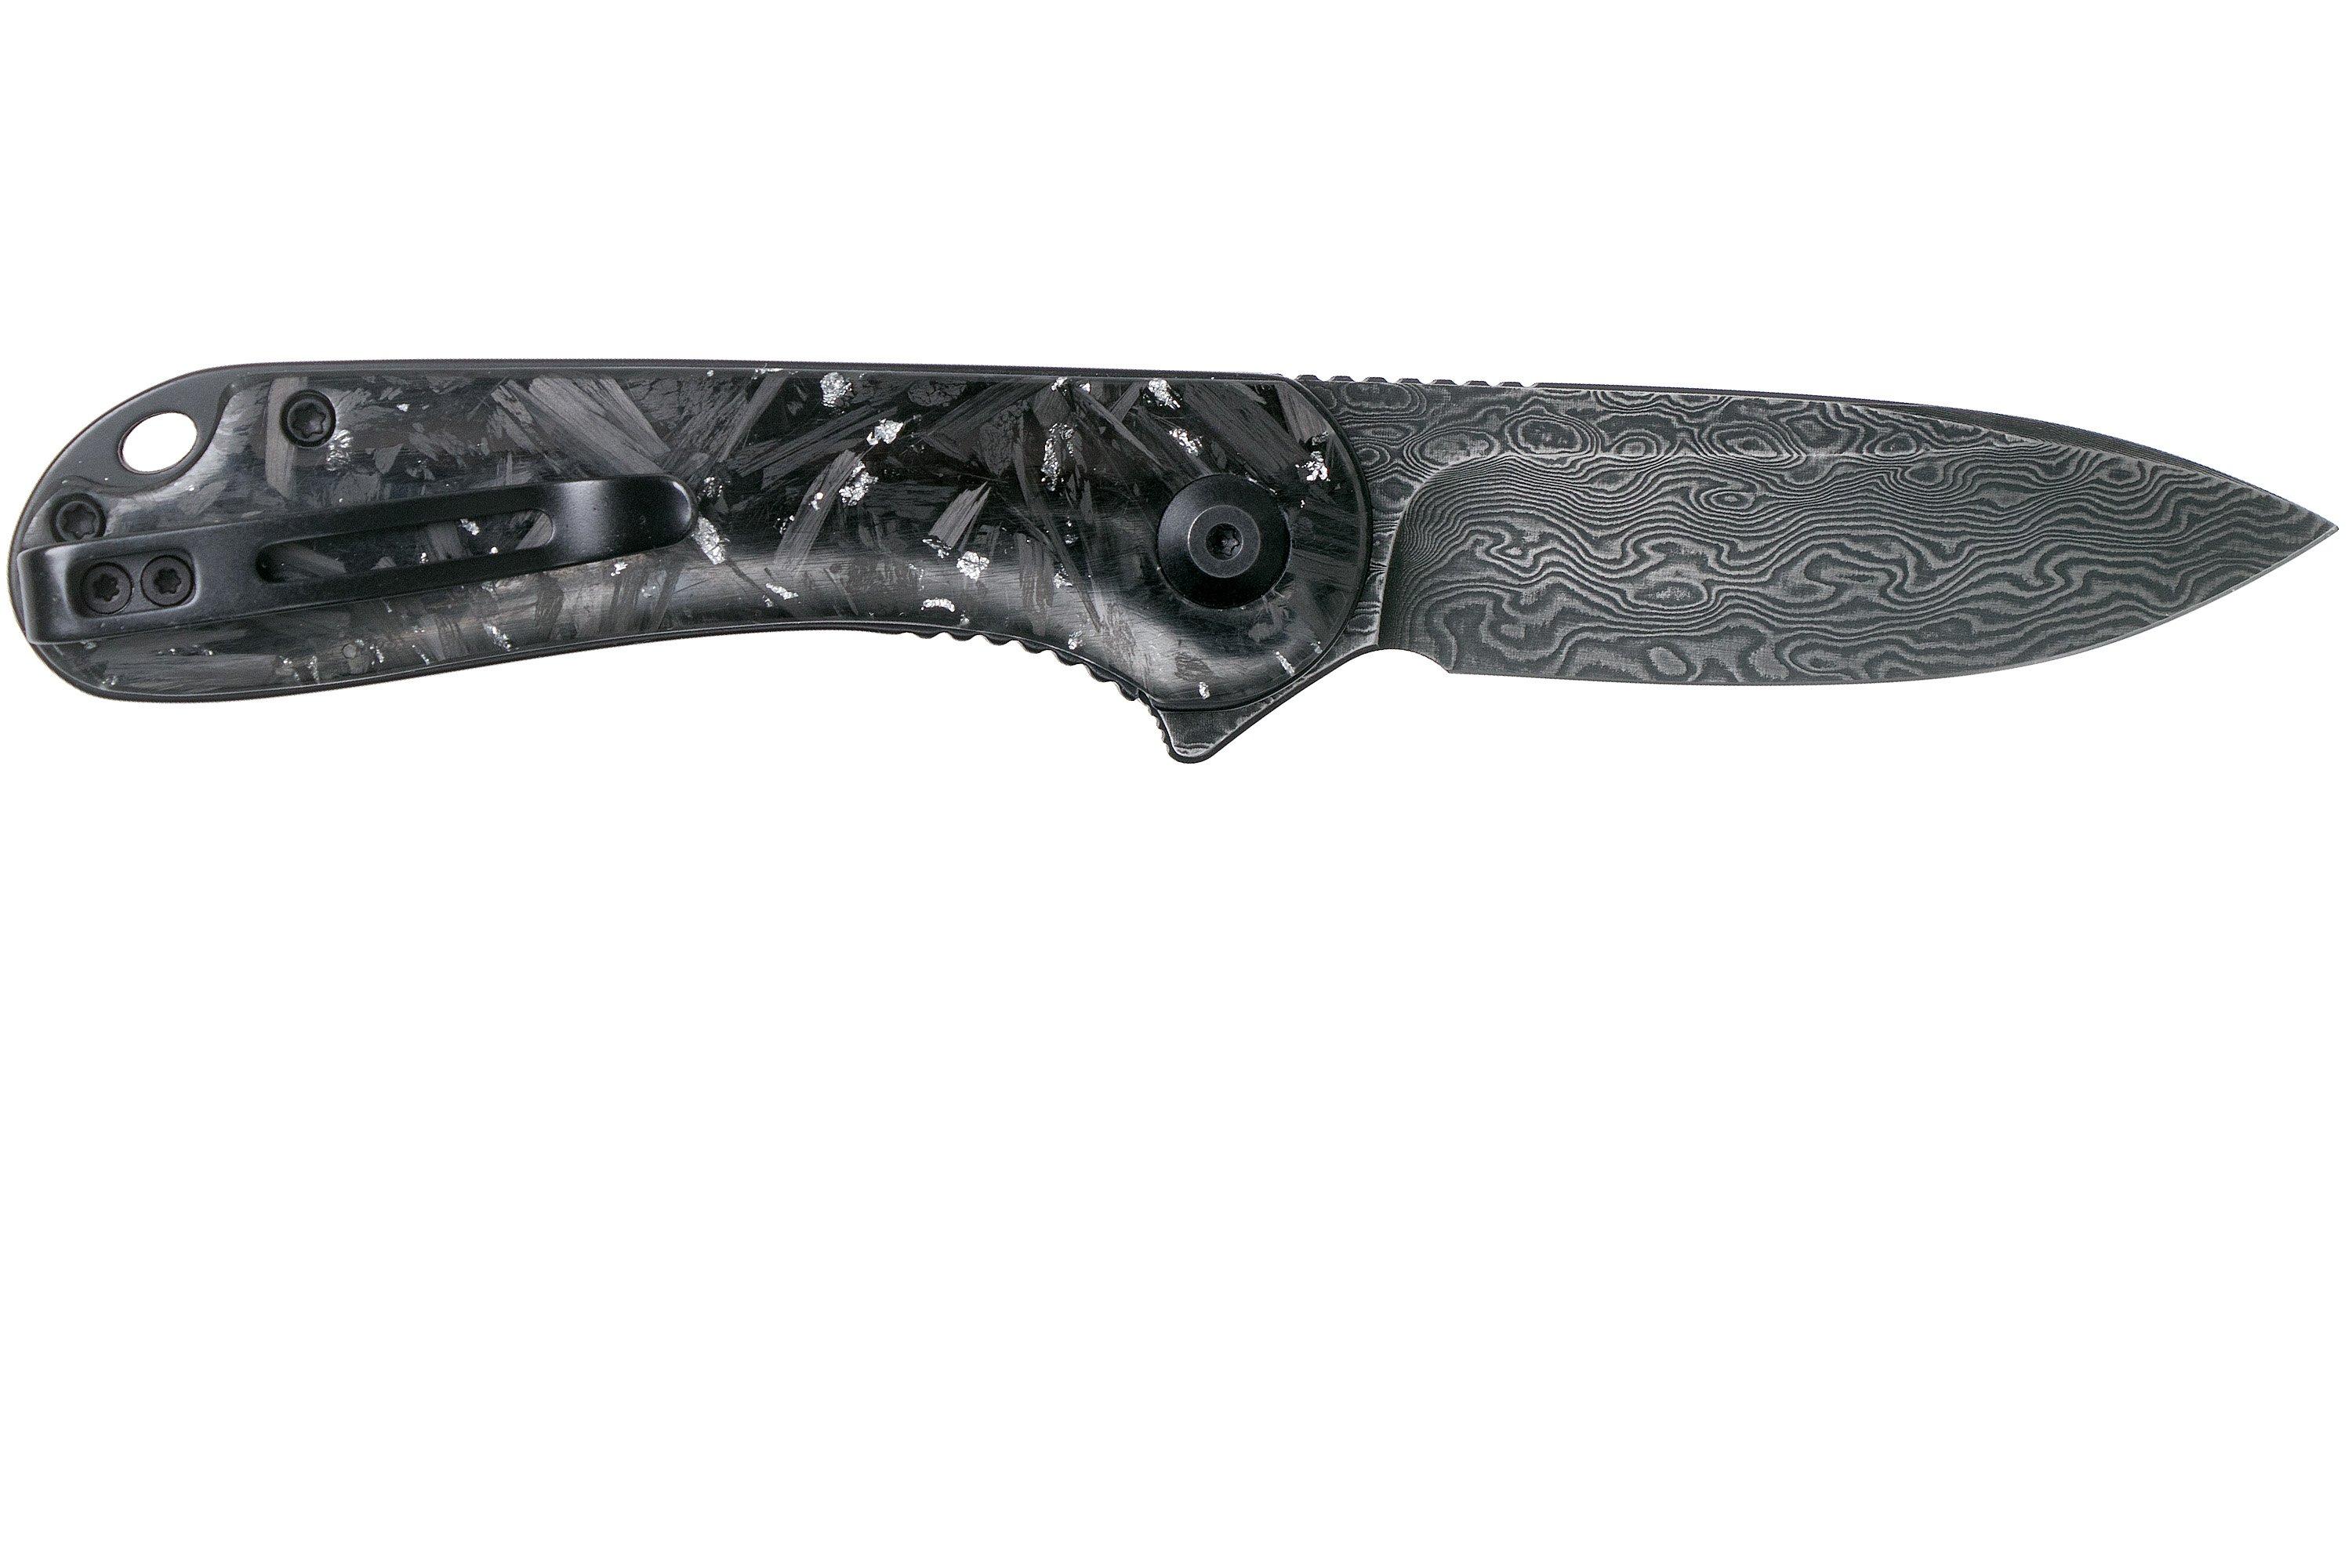 Civivi Elementum C907C-DS2 Damascus, Shredded Silver Carbon fibre pocket  knife | Advantageously shopping at 